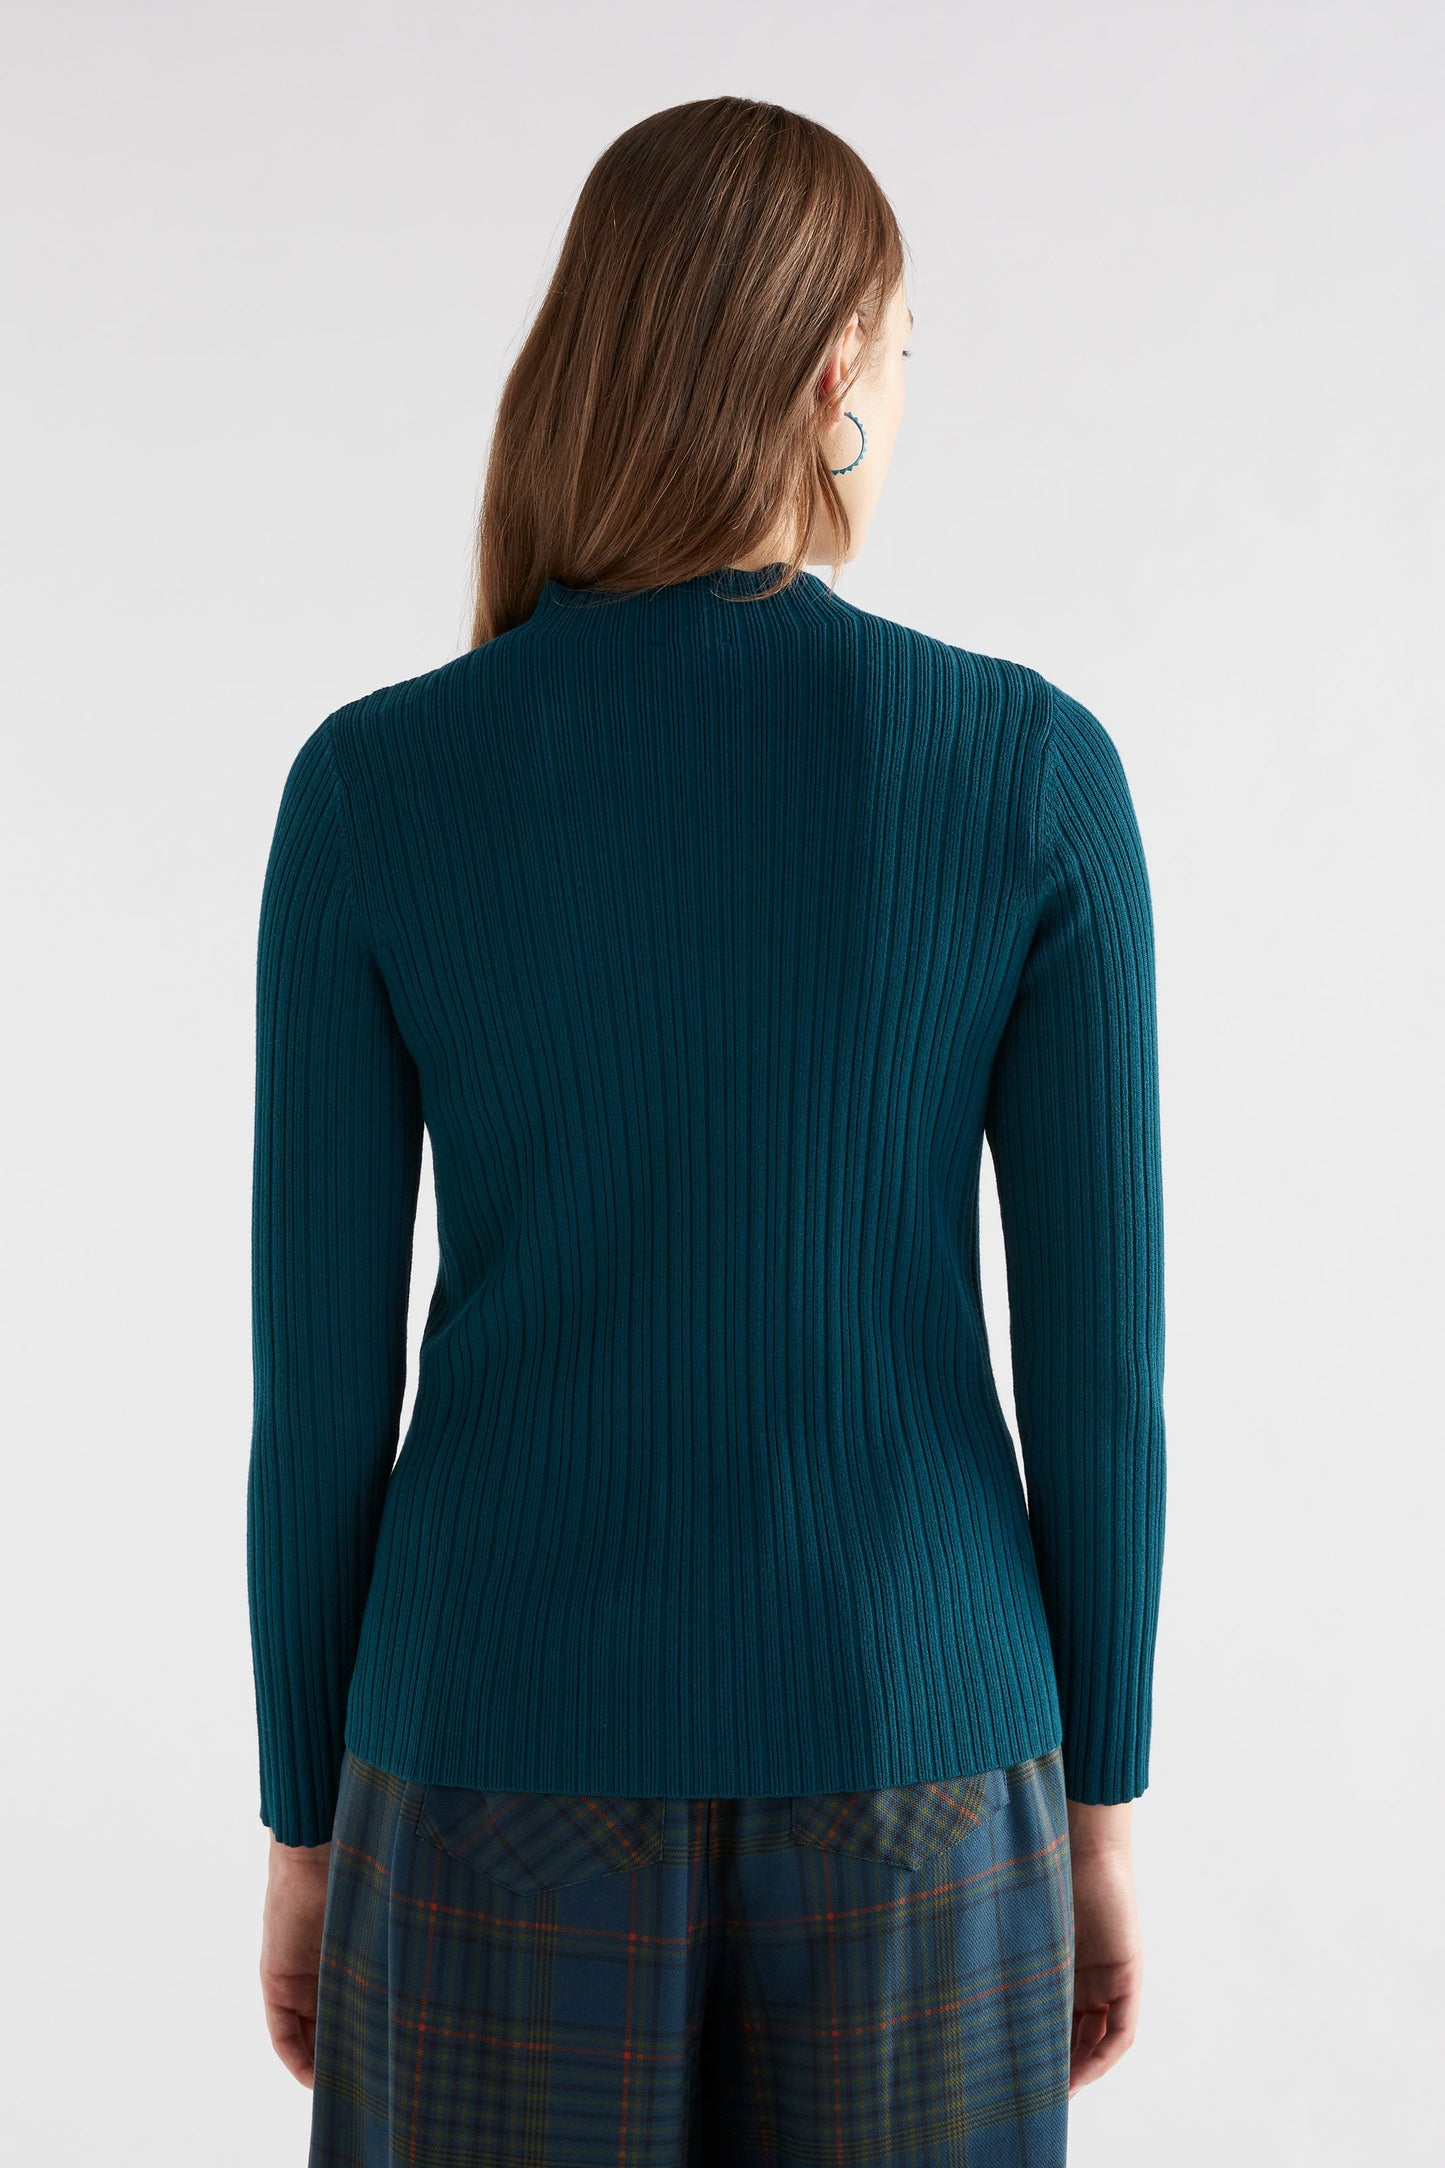 Silka Slim Fit Ribbed Funnel Neck Scalloped Sweater Model Back | TEAL BLUE